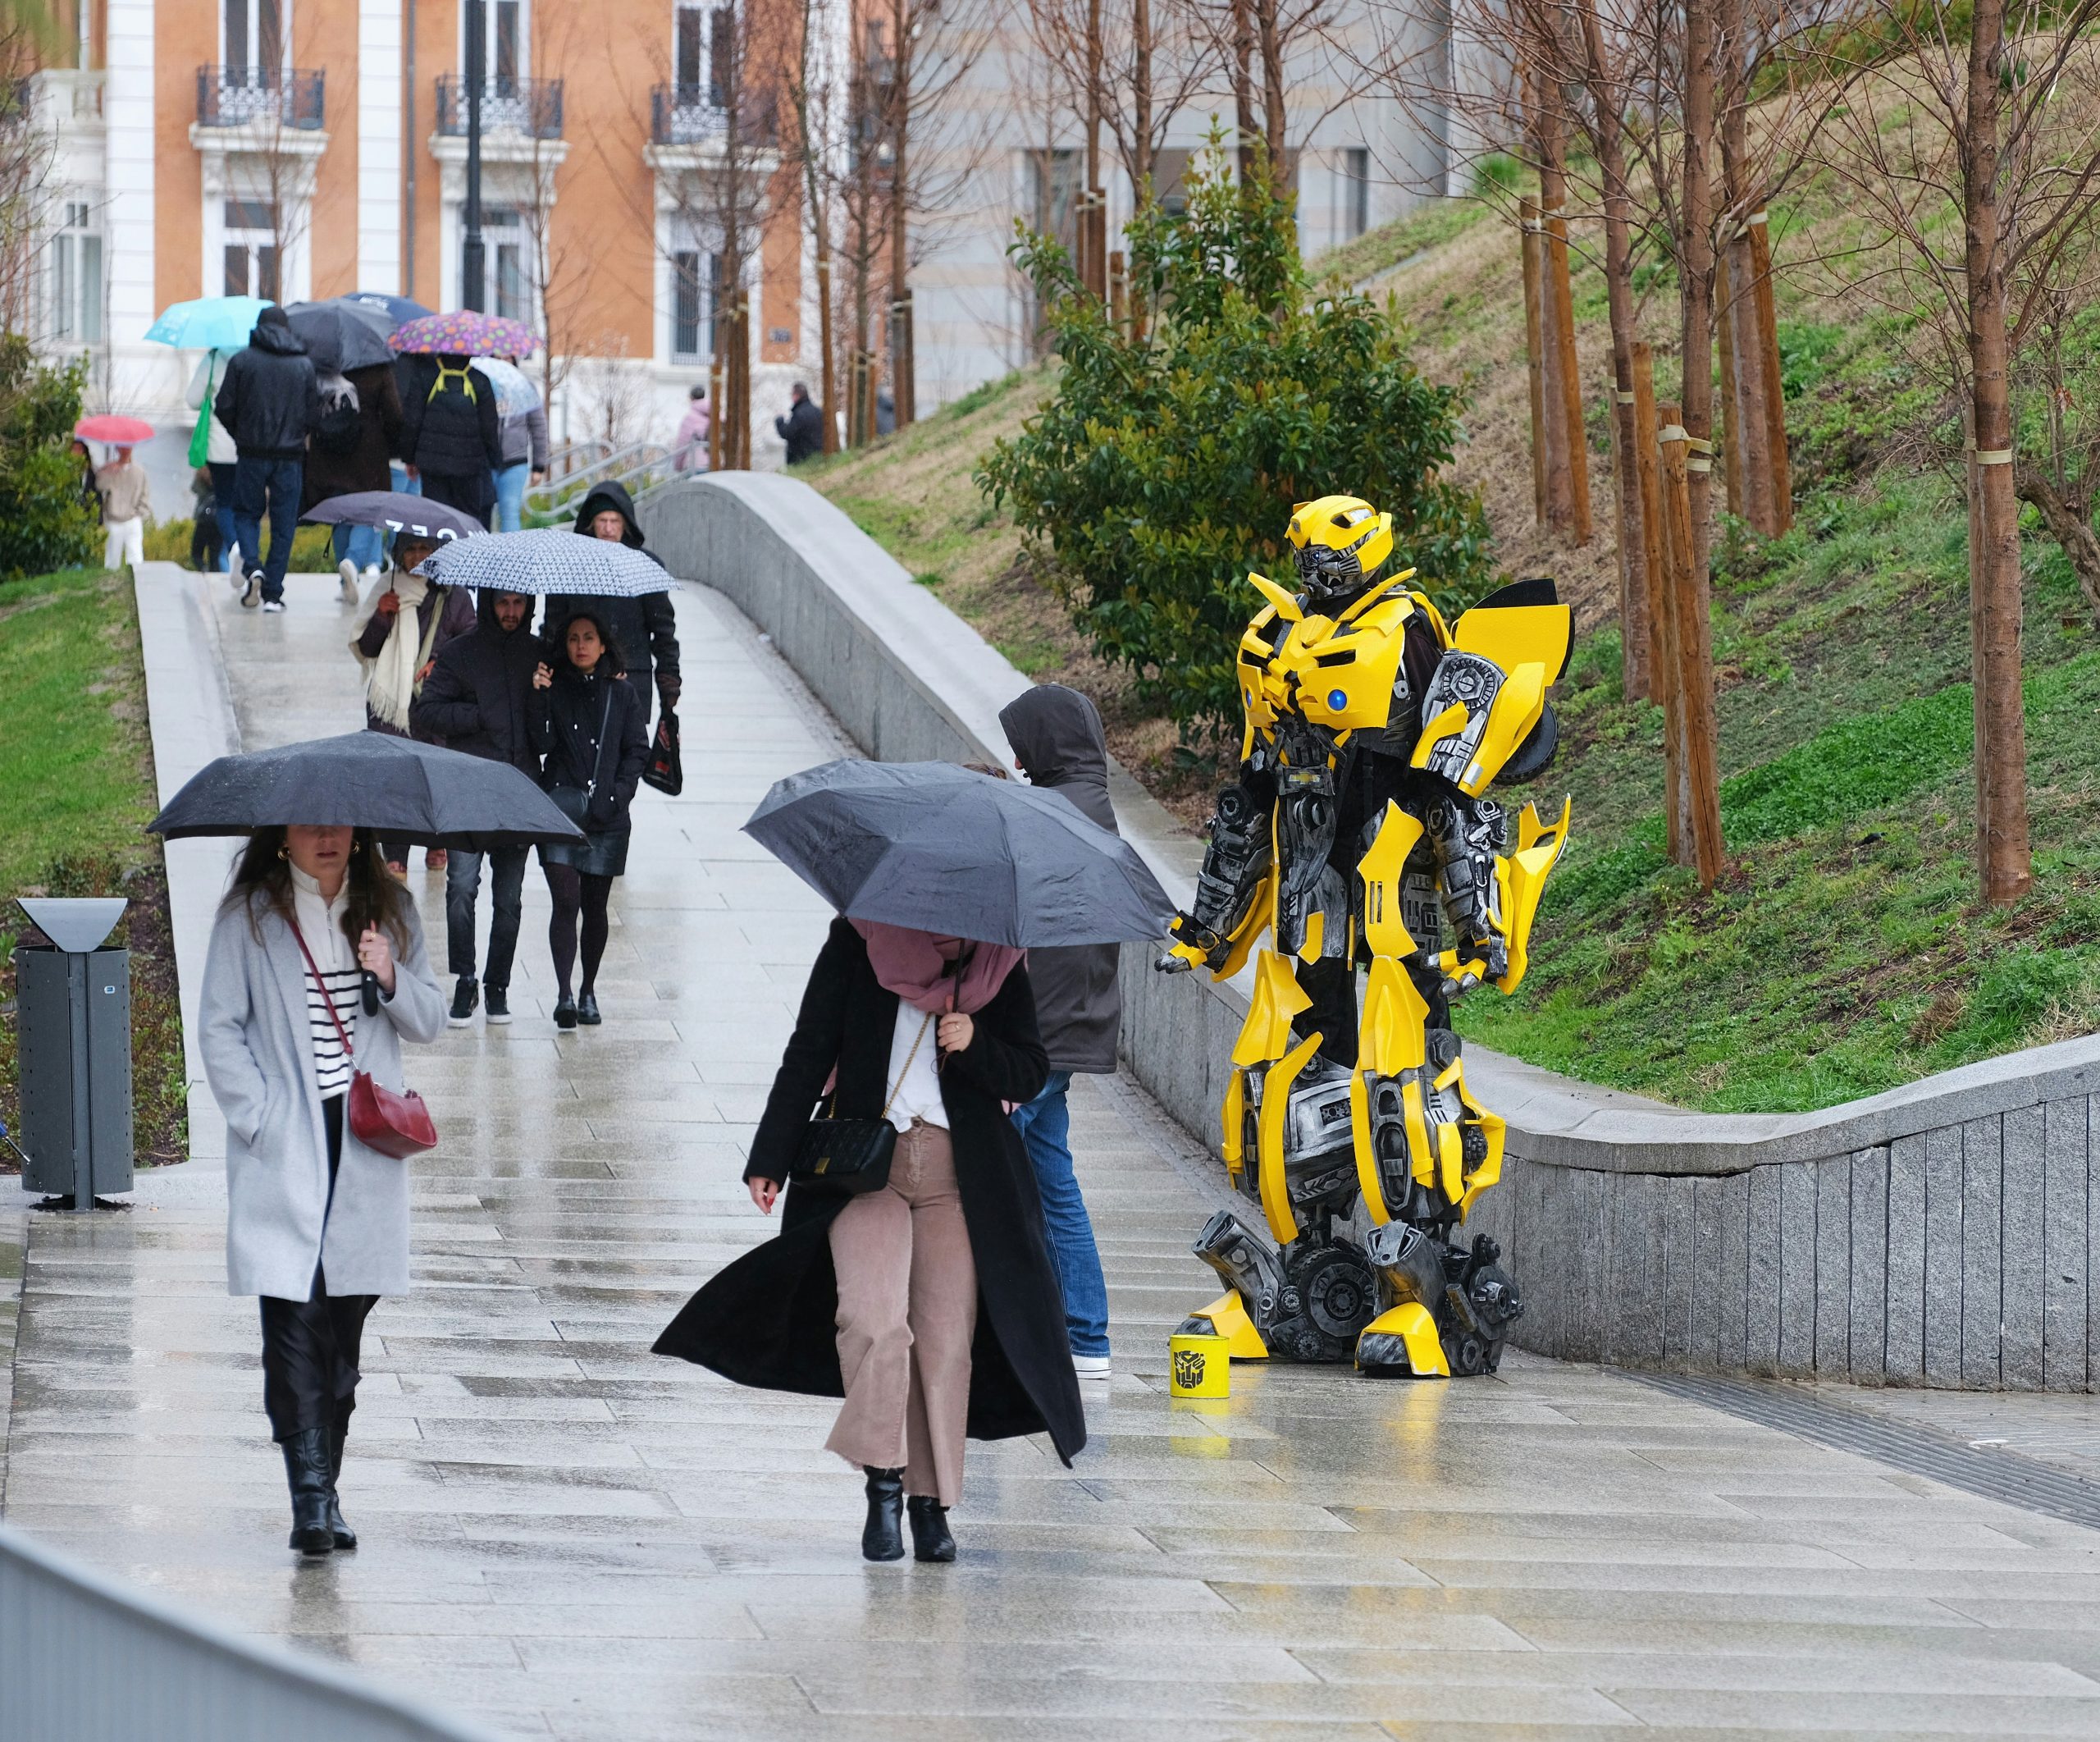 Transformer in the rain. Photo by Dmitrii Eliuseev on Unsplash. https://unsplash.com/photos/a-group-of-people-walking-down-a-sidewalk-holding-umbrellas-MScmjafKMDU